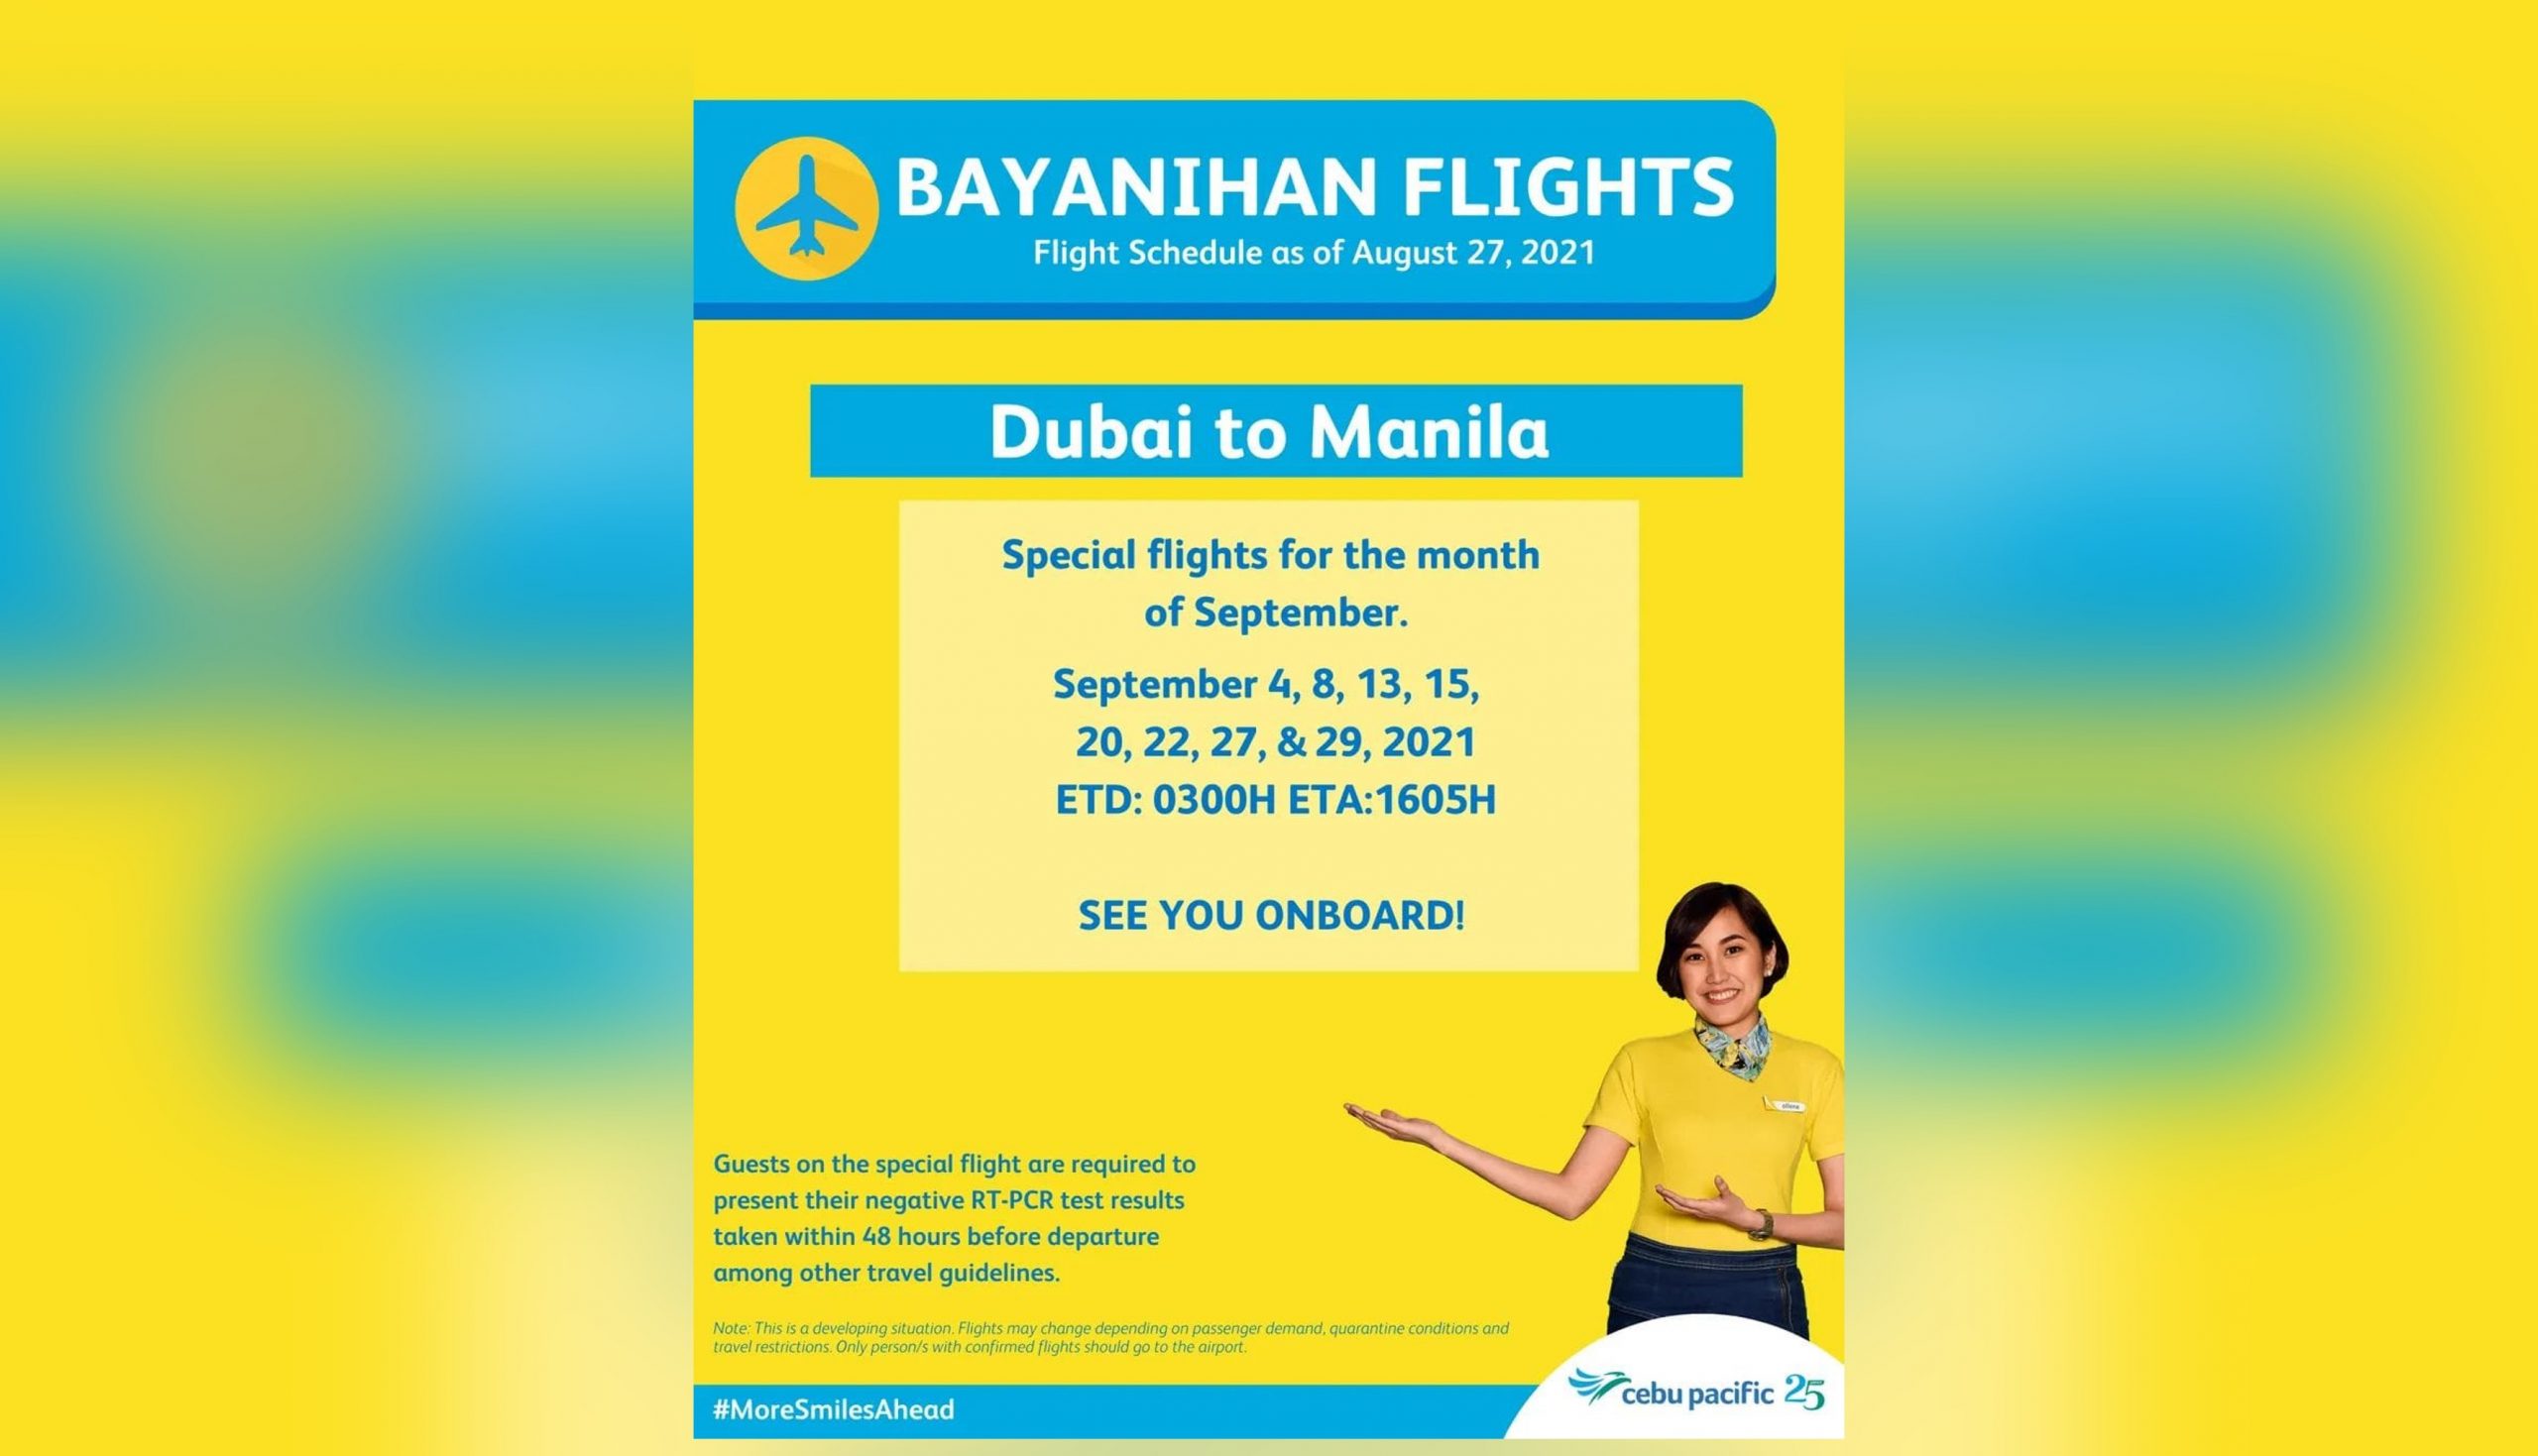 Cebu Pacific mounts 8 Bayanihan flights from Dubai to Manila in